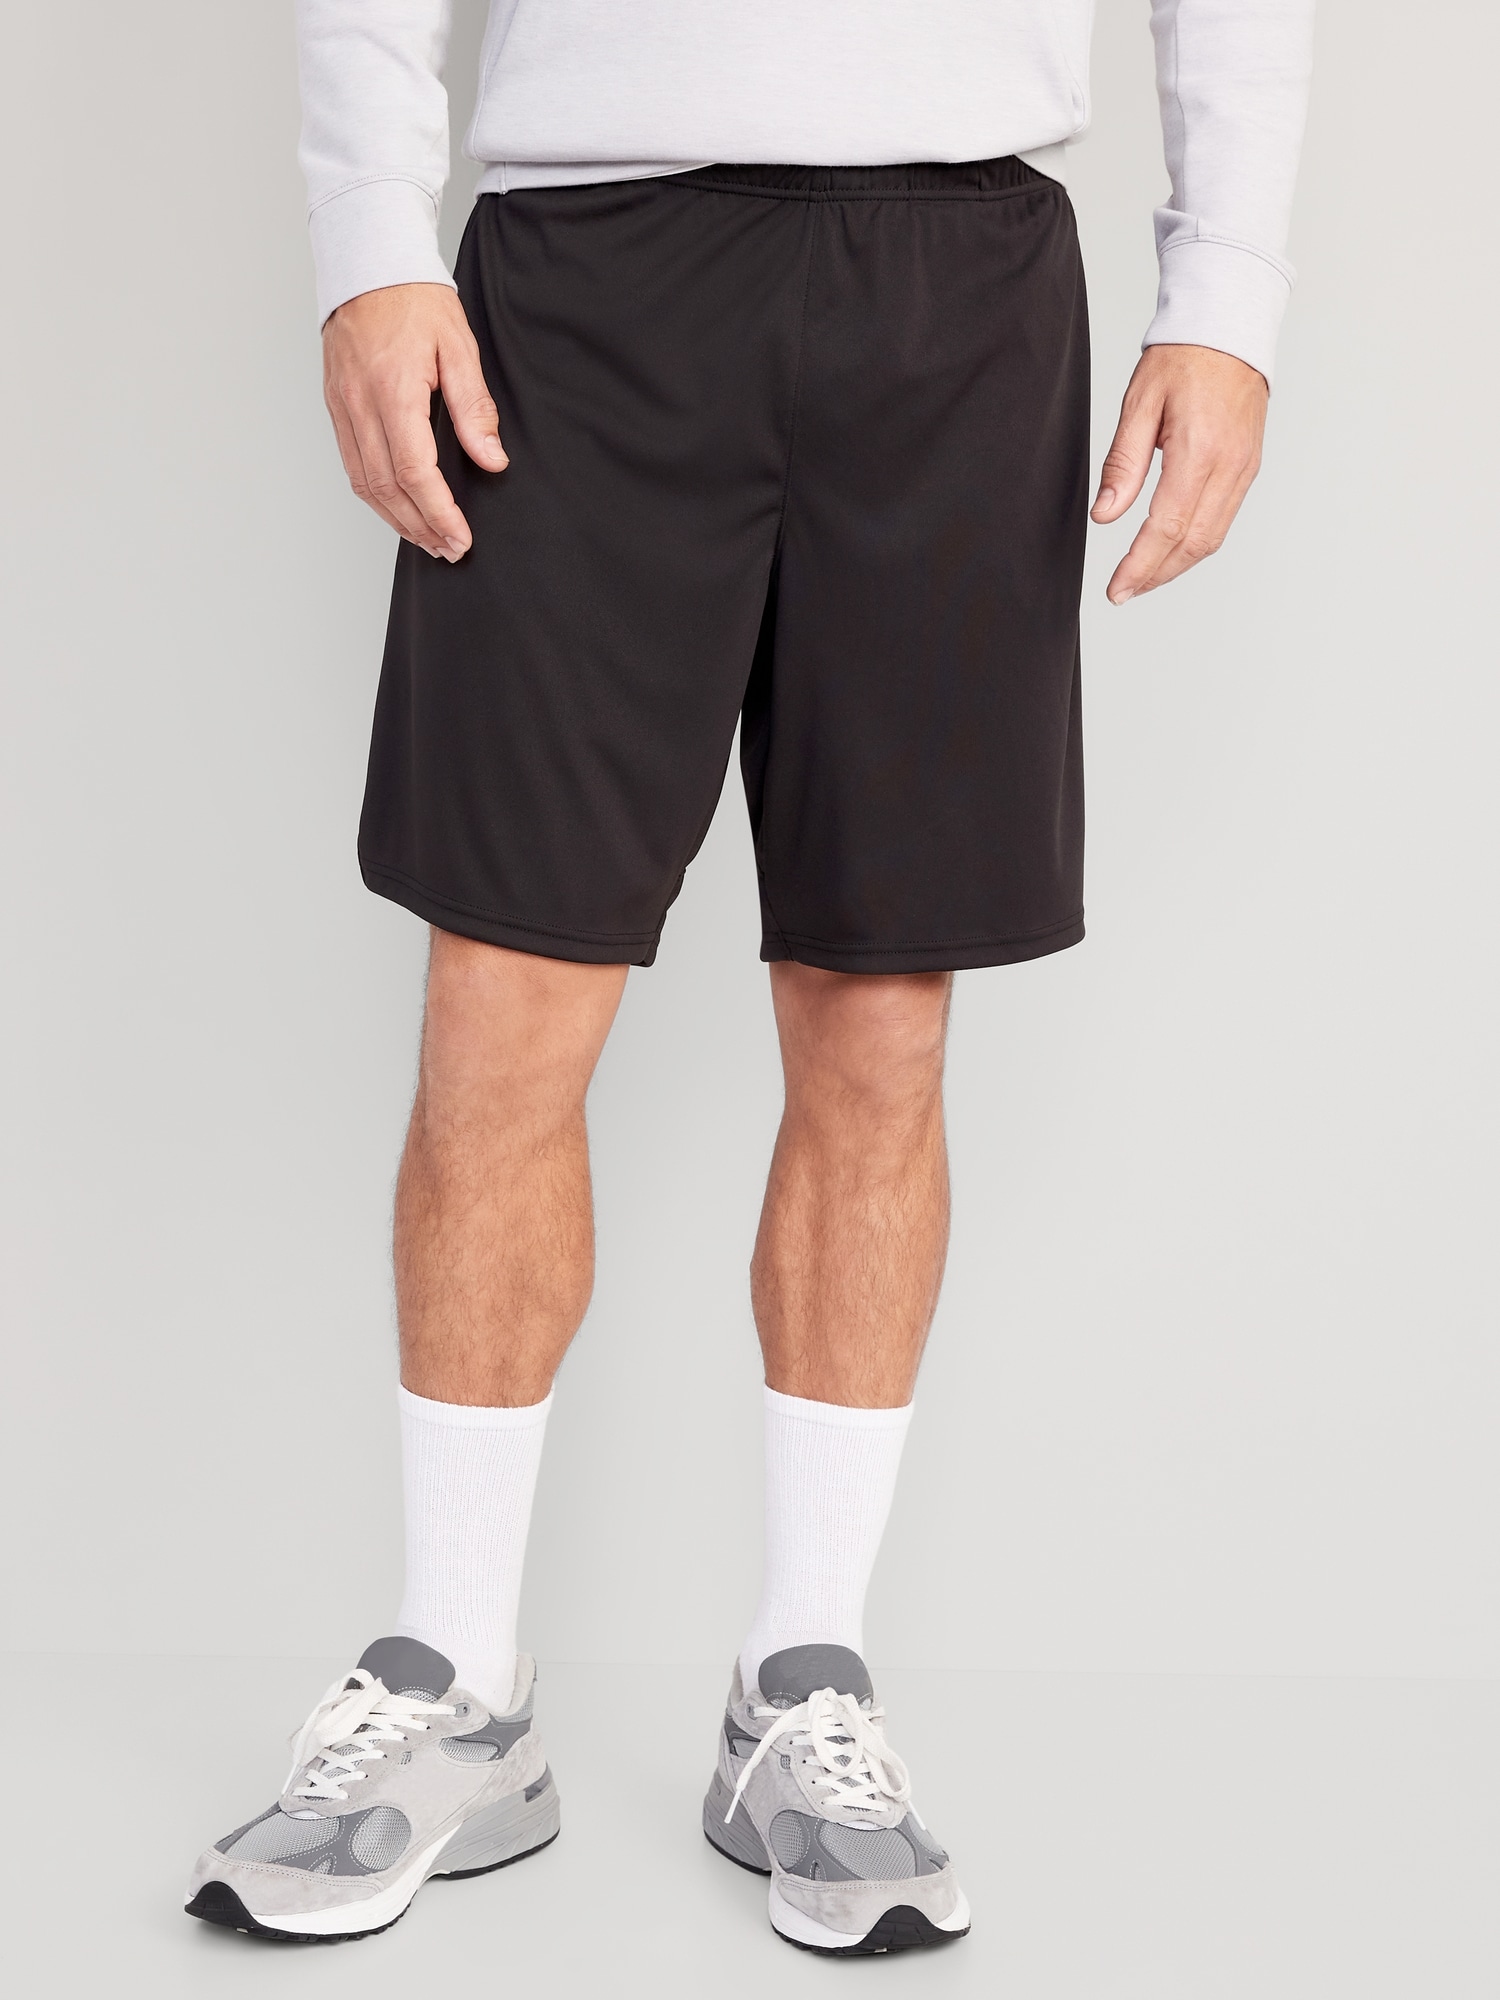 Basketball Shorts for Men | Old Navy